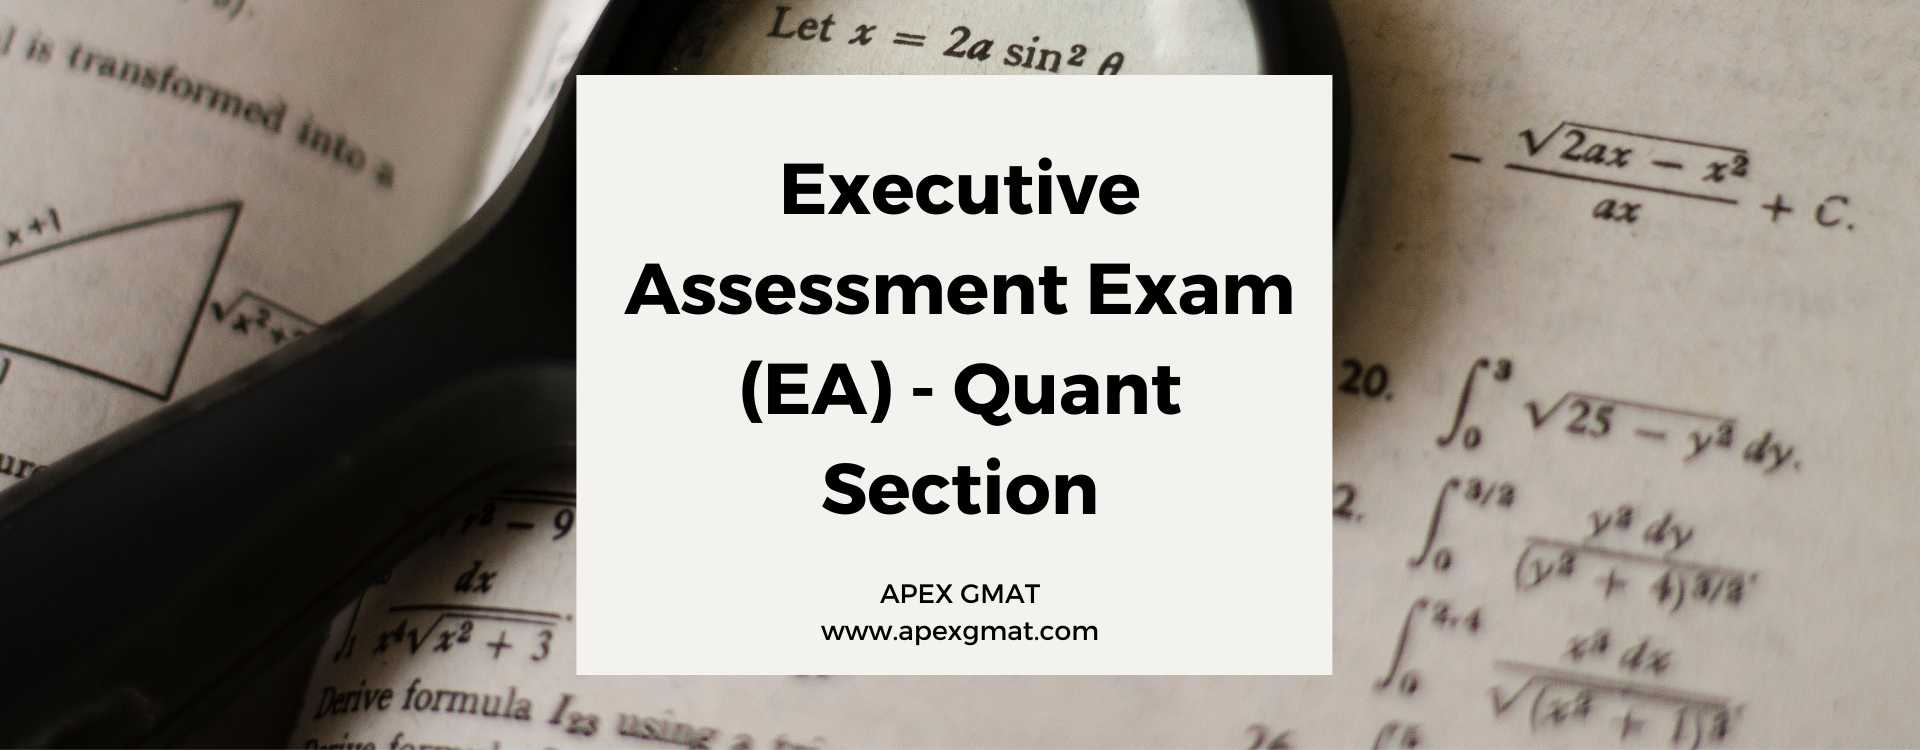 Executive Assessment Exam (EA) – Quant Section